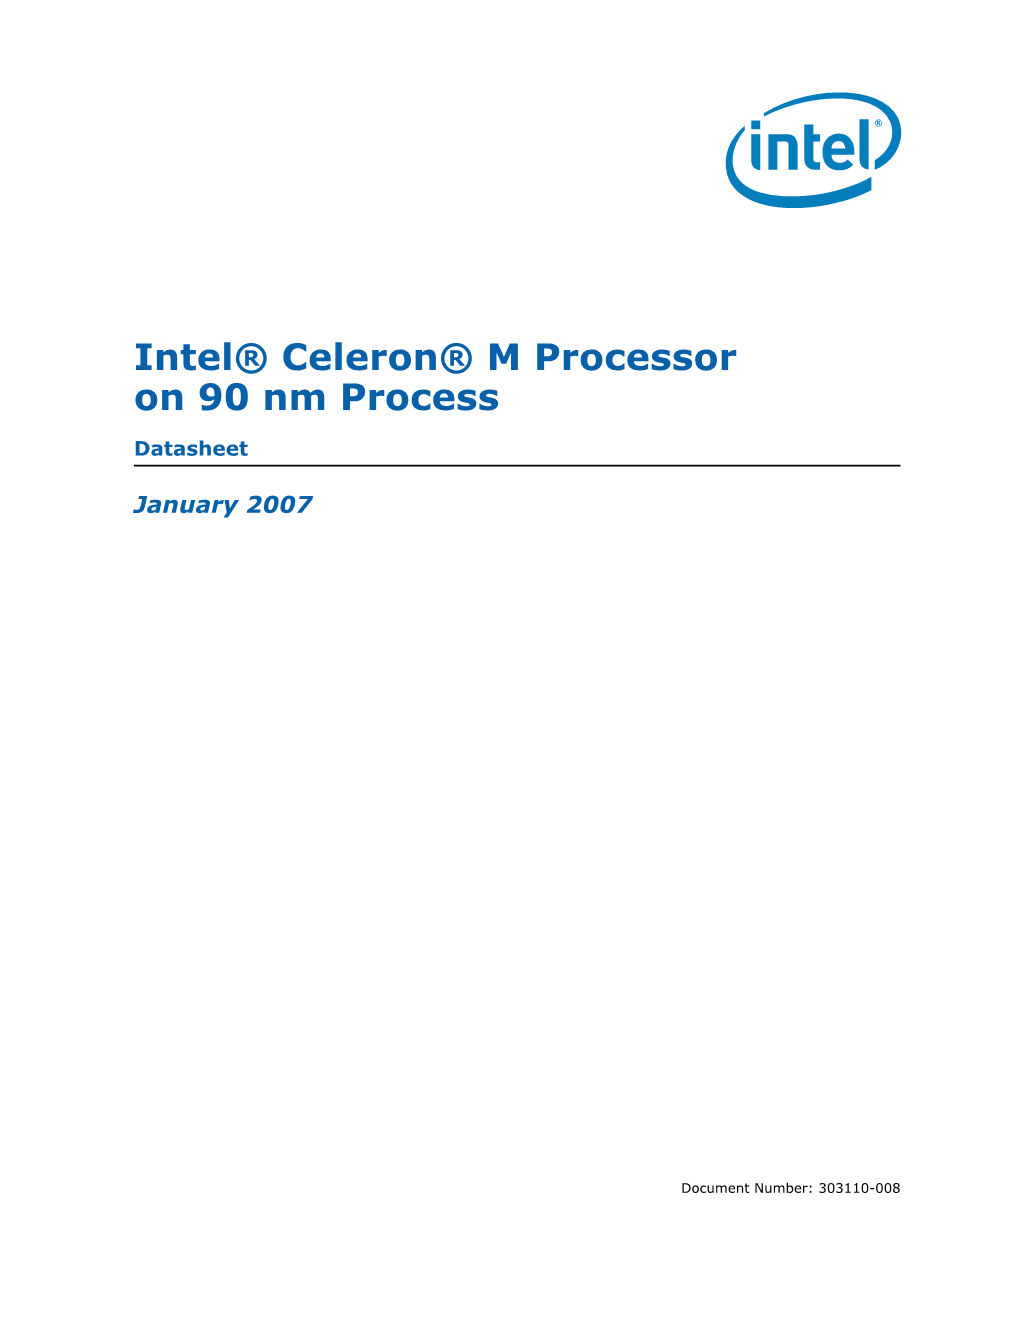 Intel(R) Celeron(R) M Processor on 90 Nm Process Datasheet